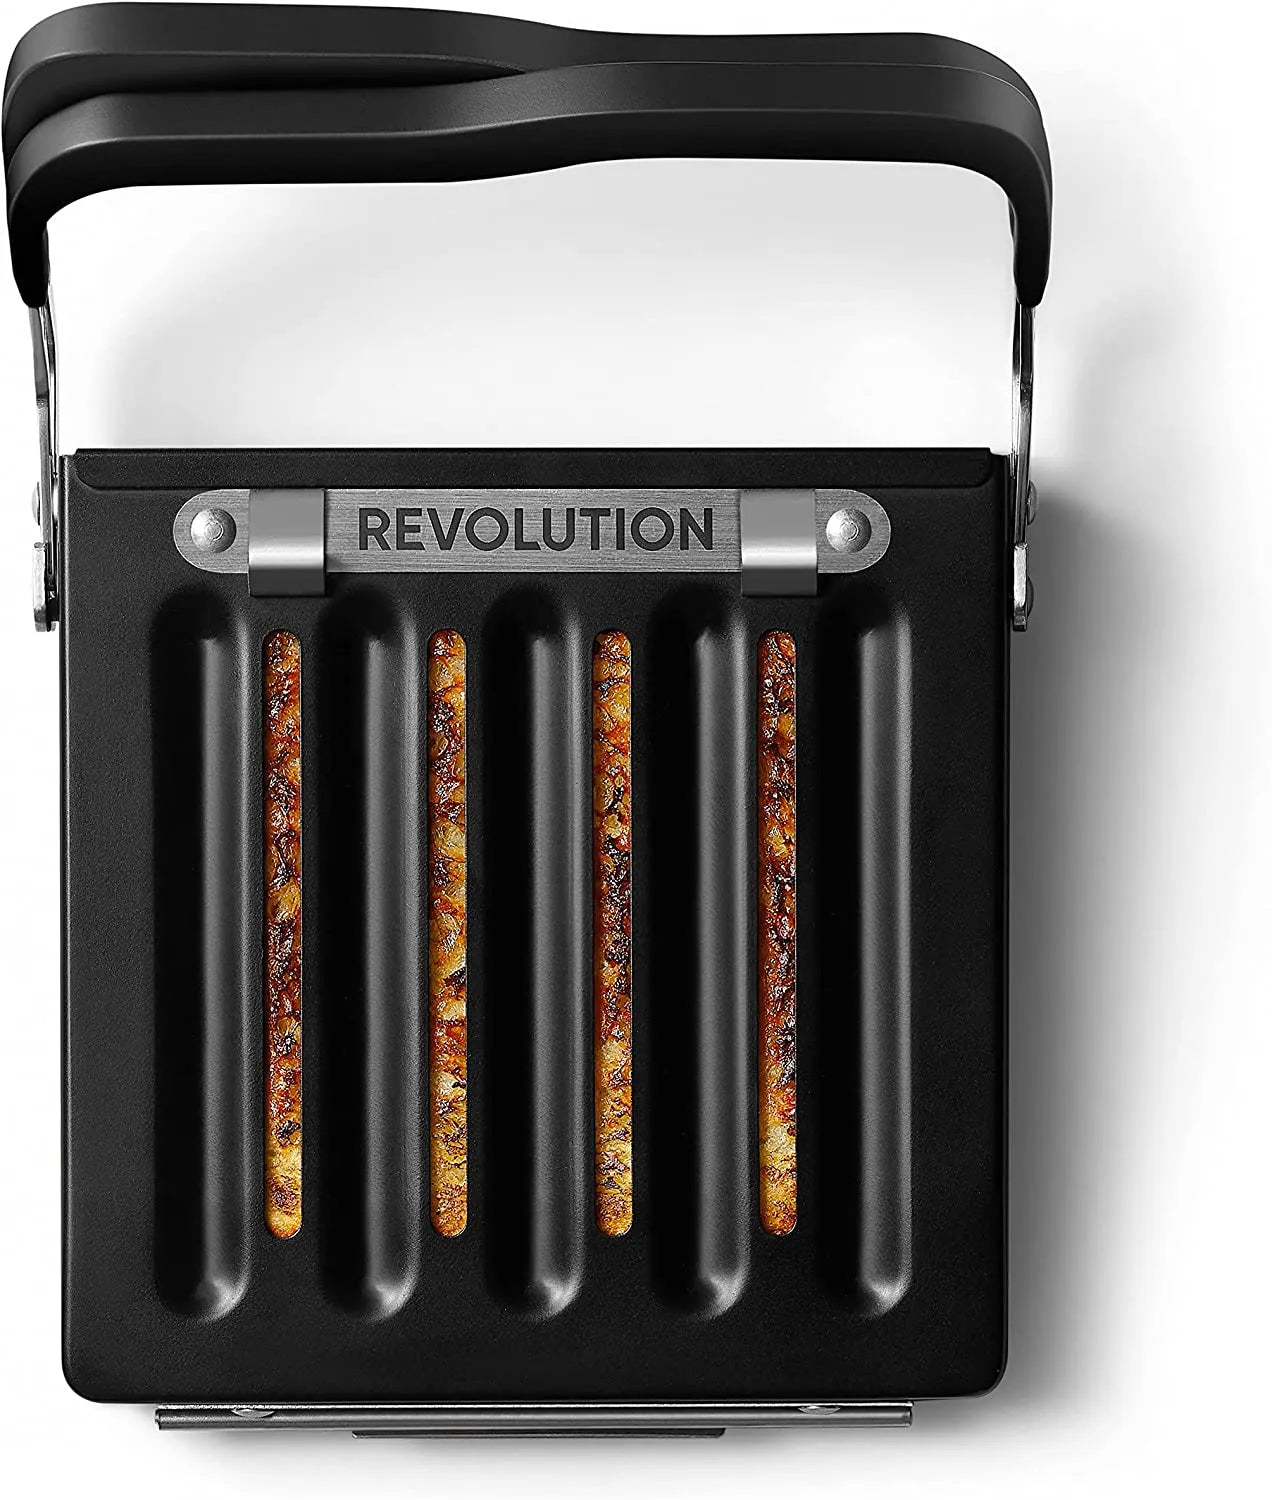 Revolution™ Toaster